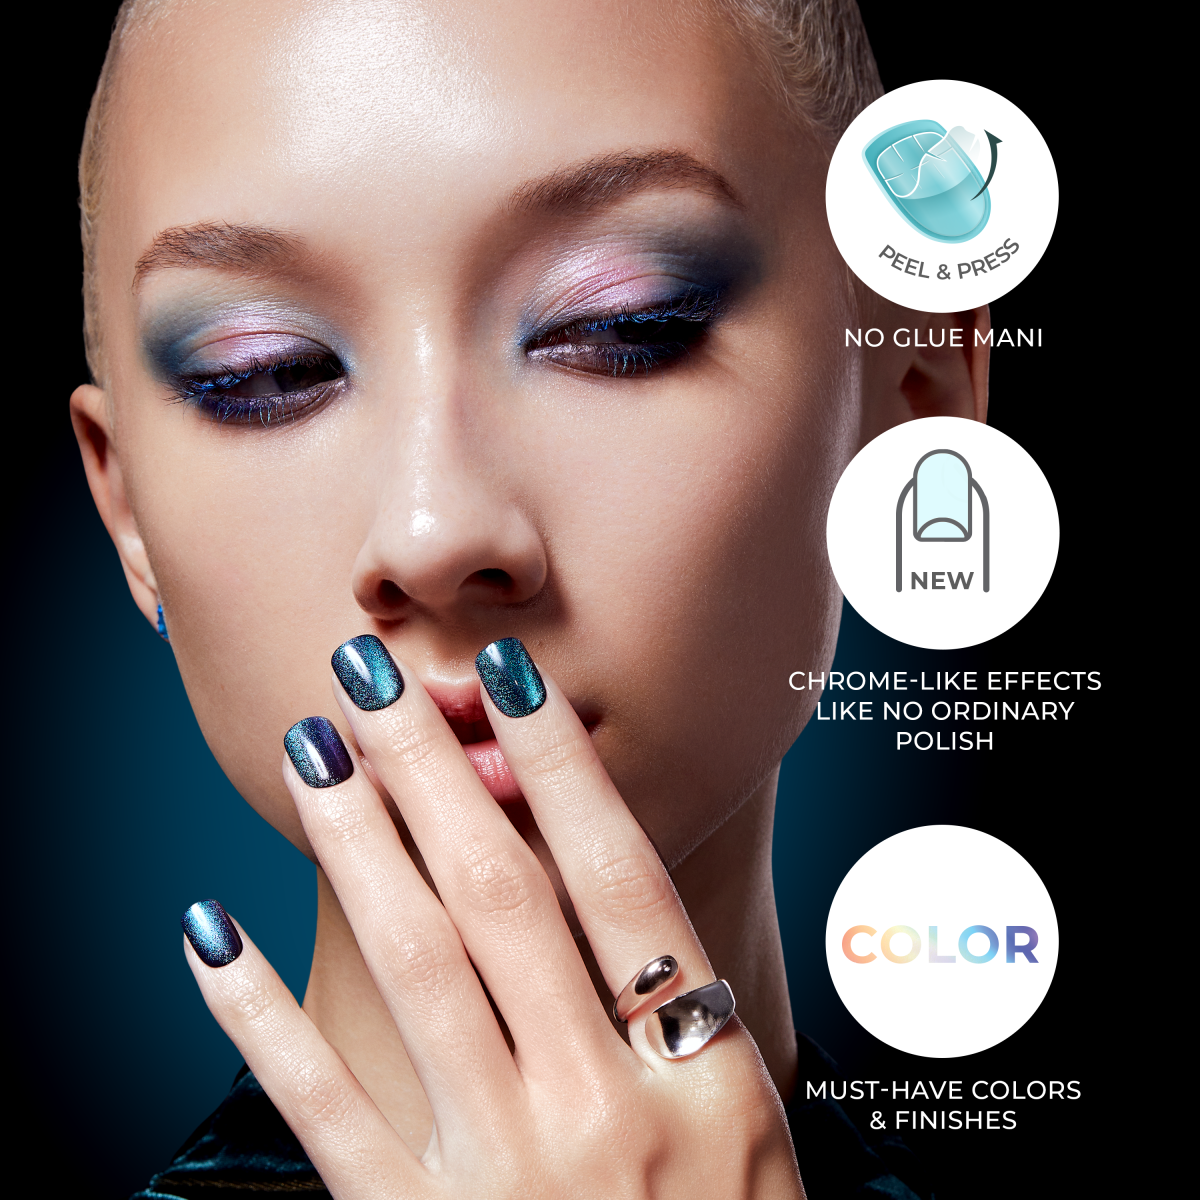 KISS imPRESS No Glue Mani Press On Nails, Color FX, Universal, White, Short Squoval, 30ct